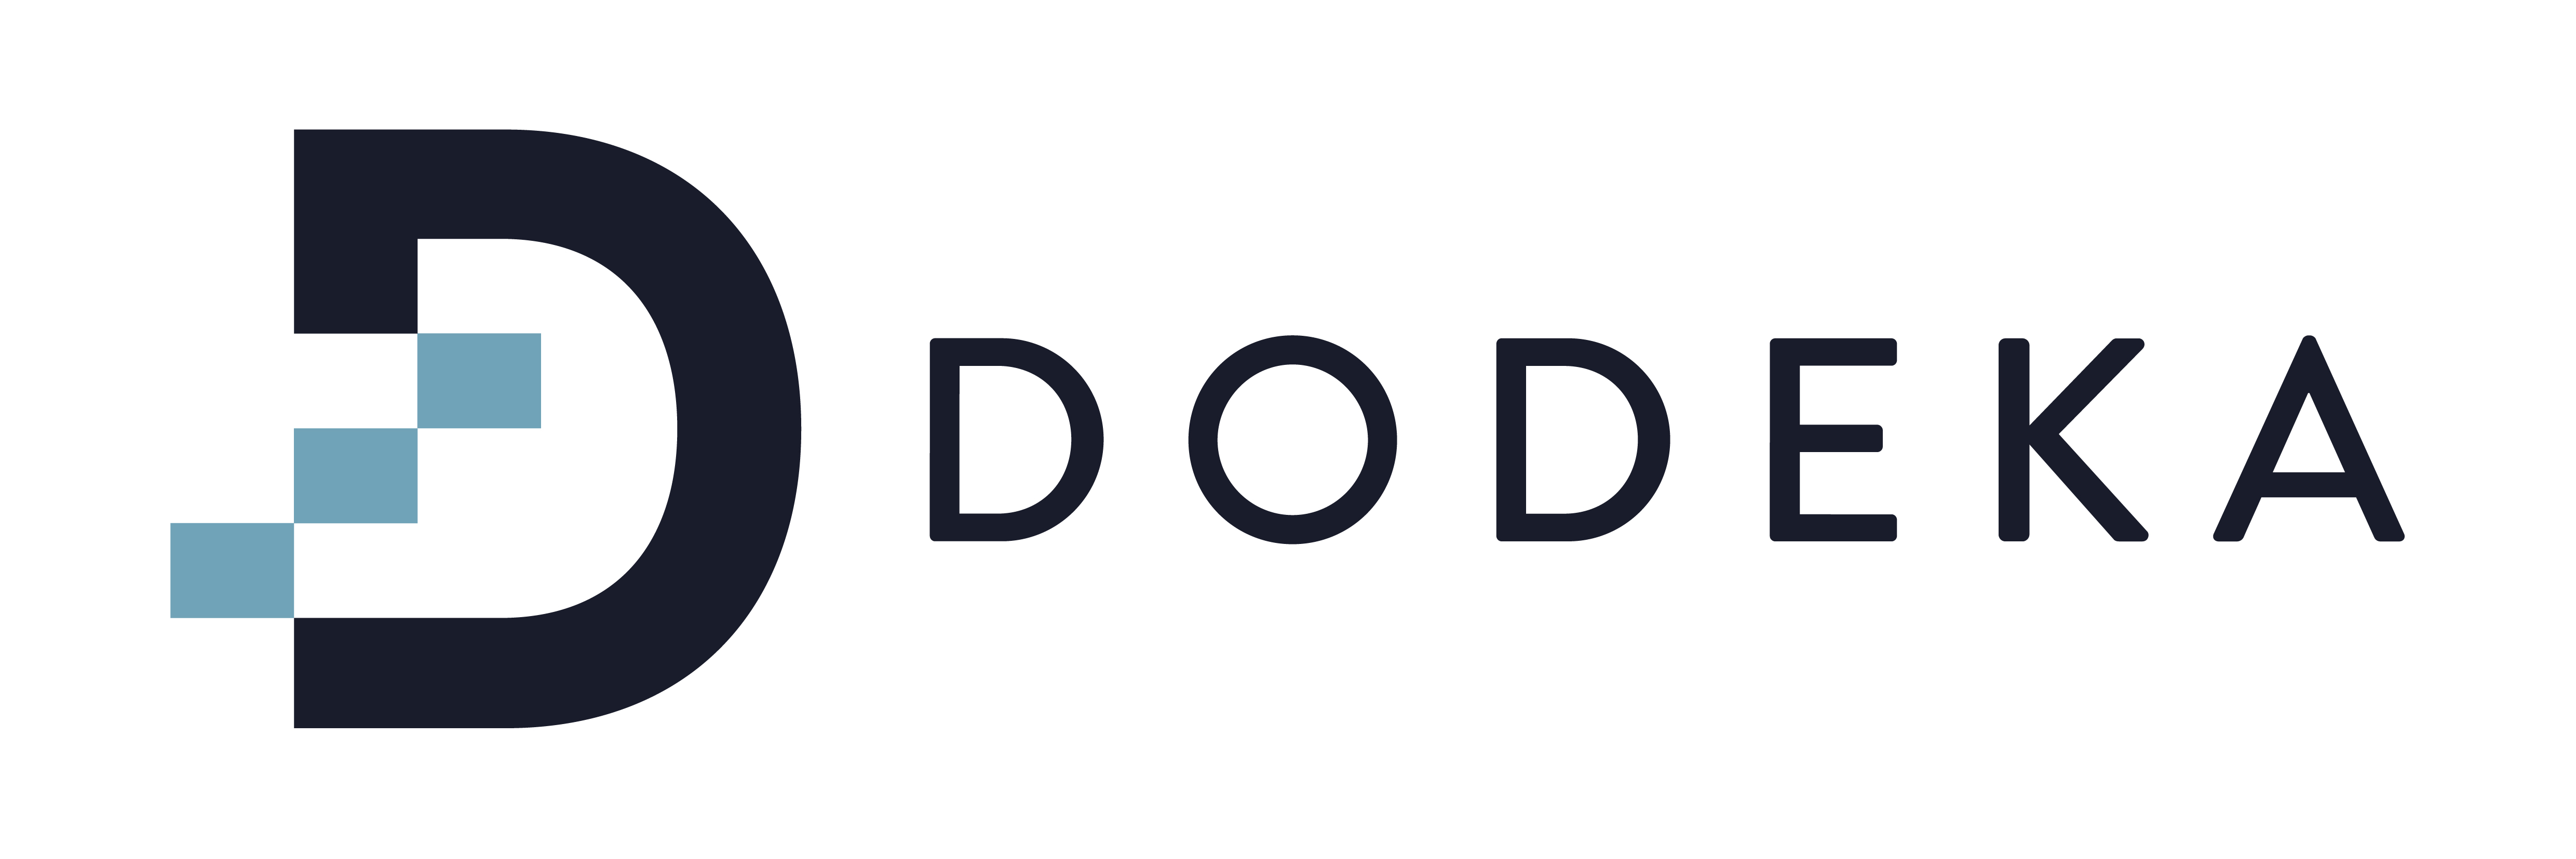 dodeka-music-logo-here